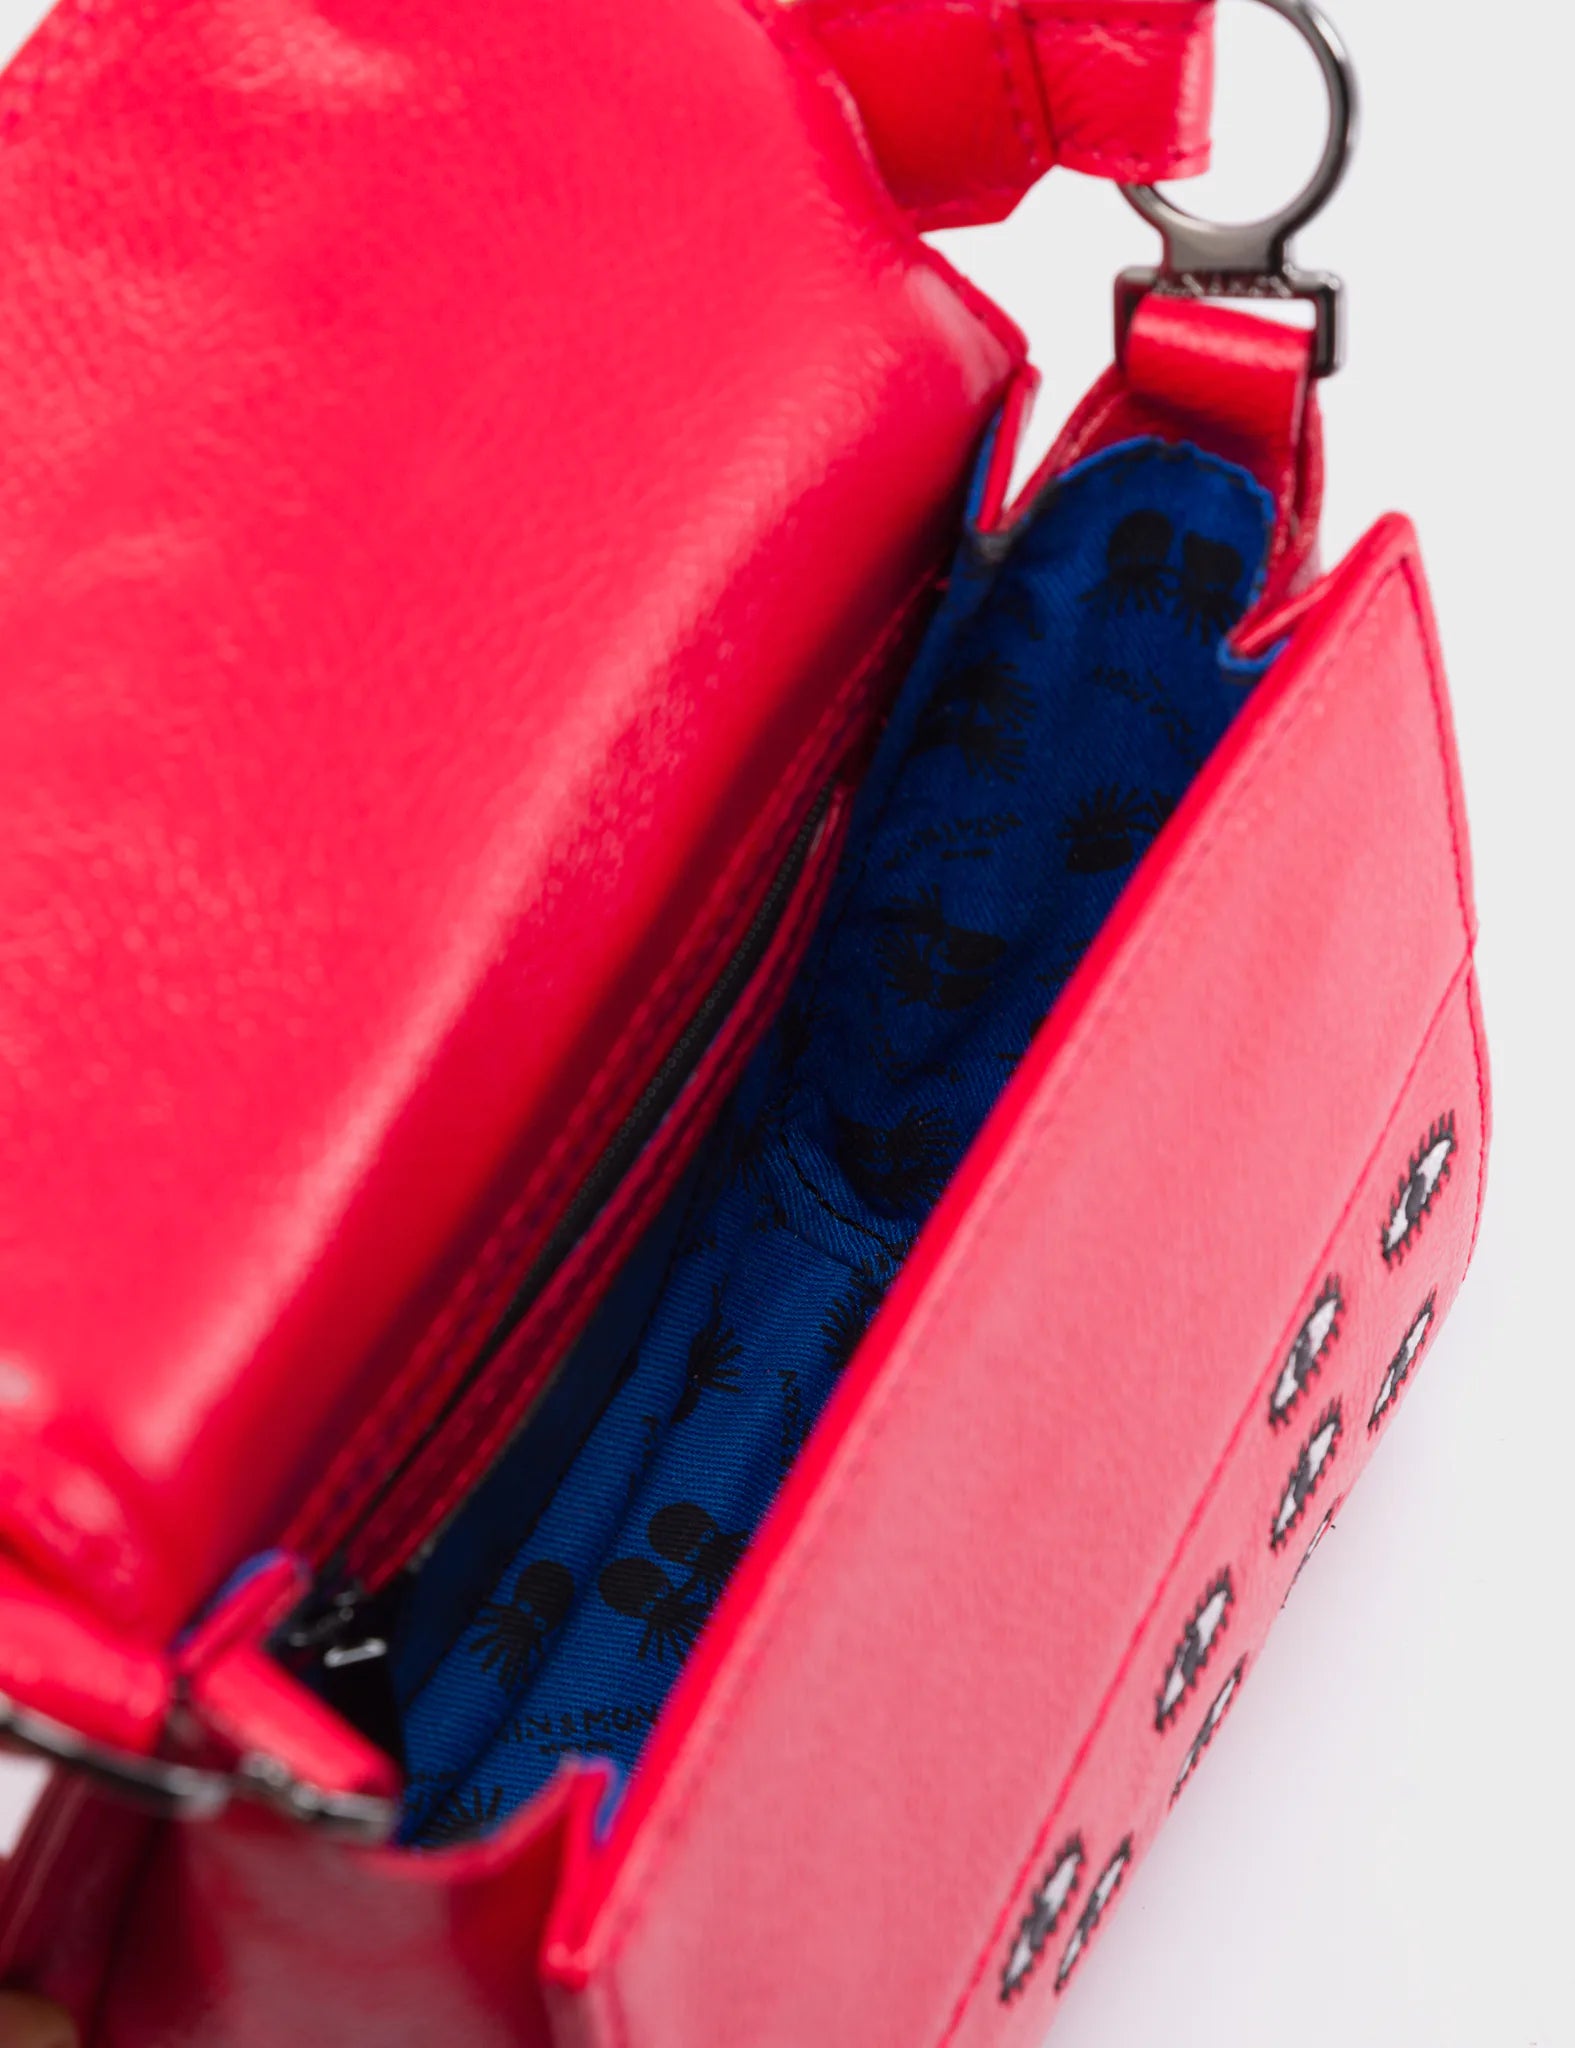 Anastasio Micro Crossbody Handbag Red Leather - Eyes Embroidery - Inside View